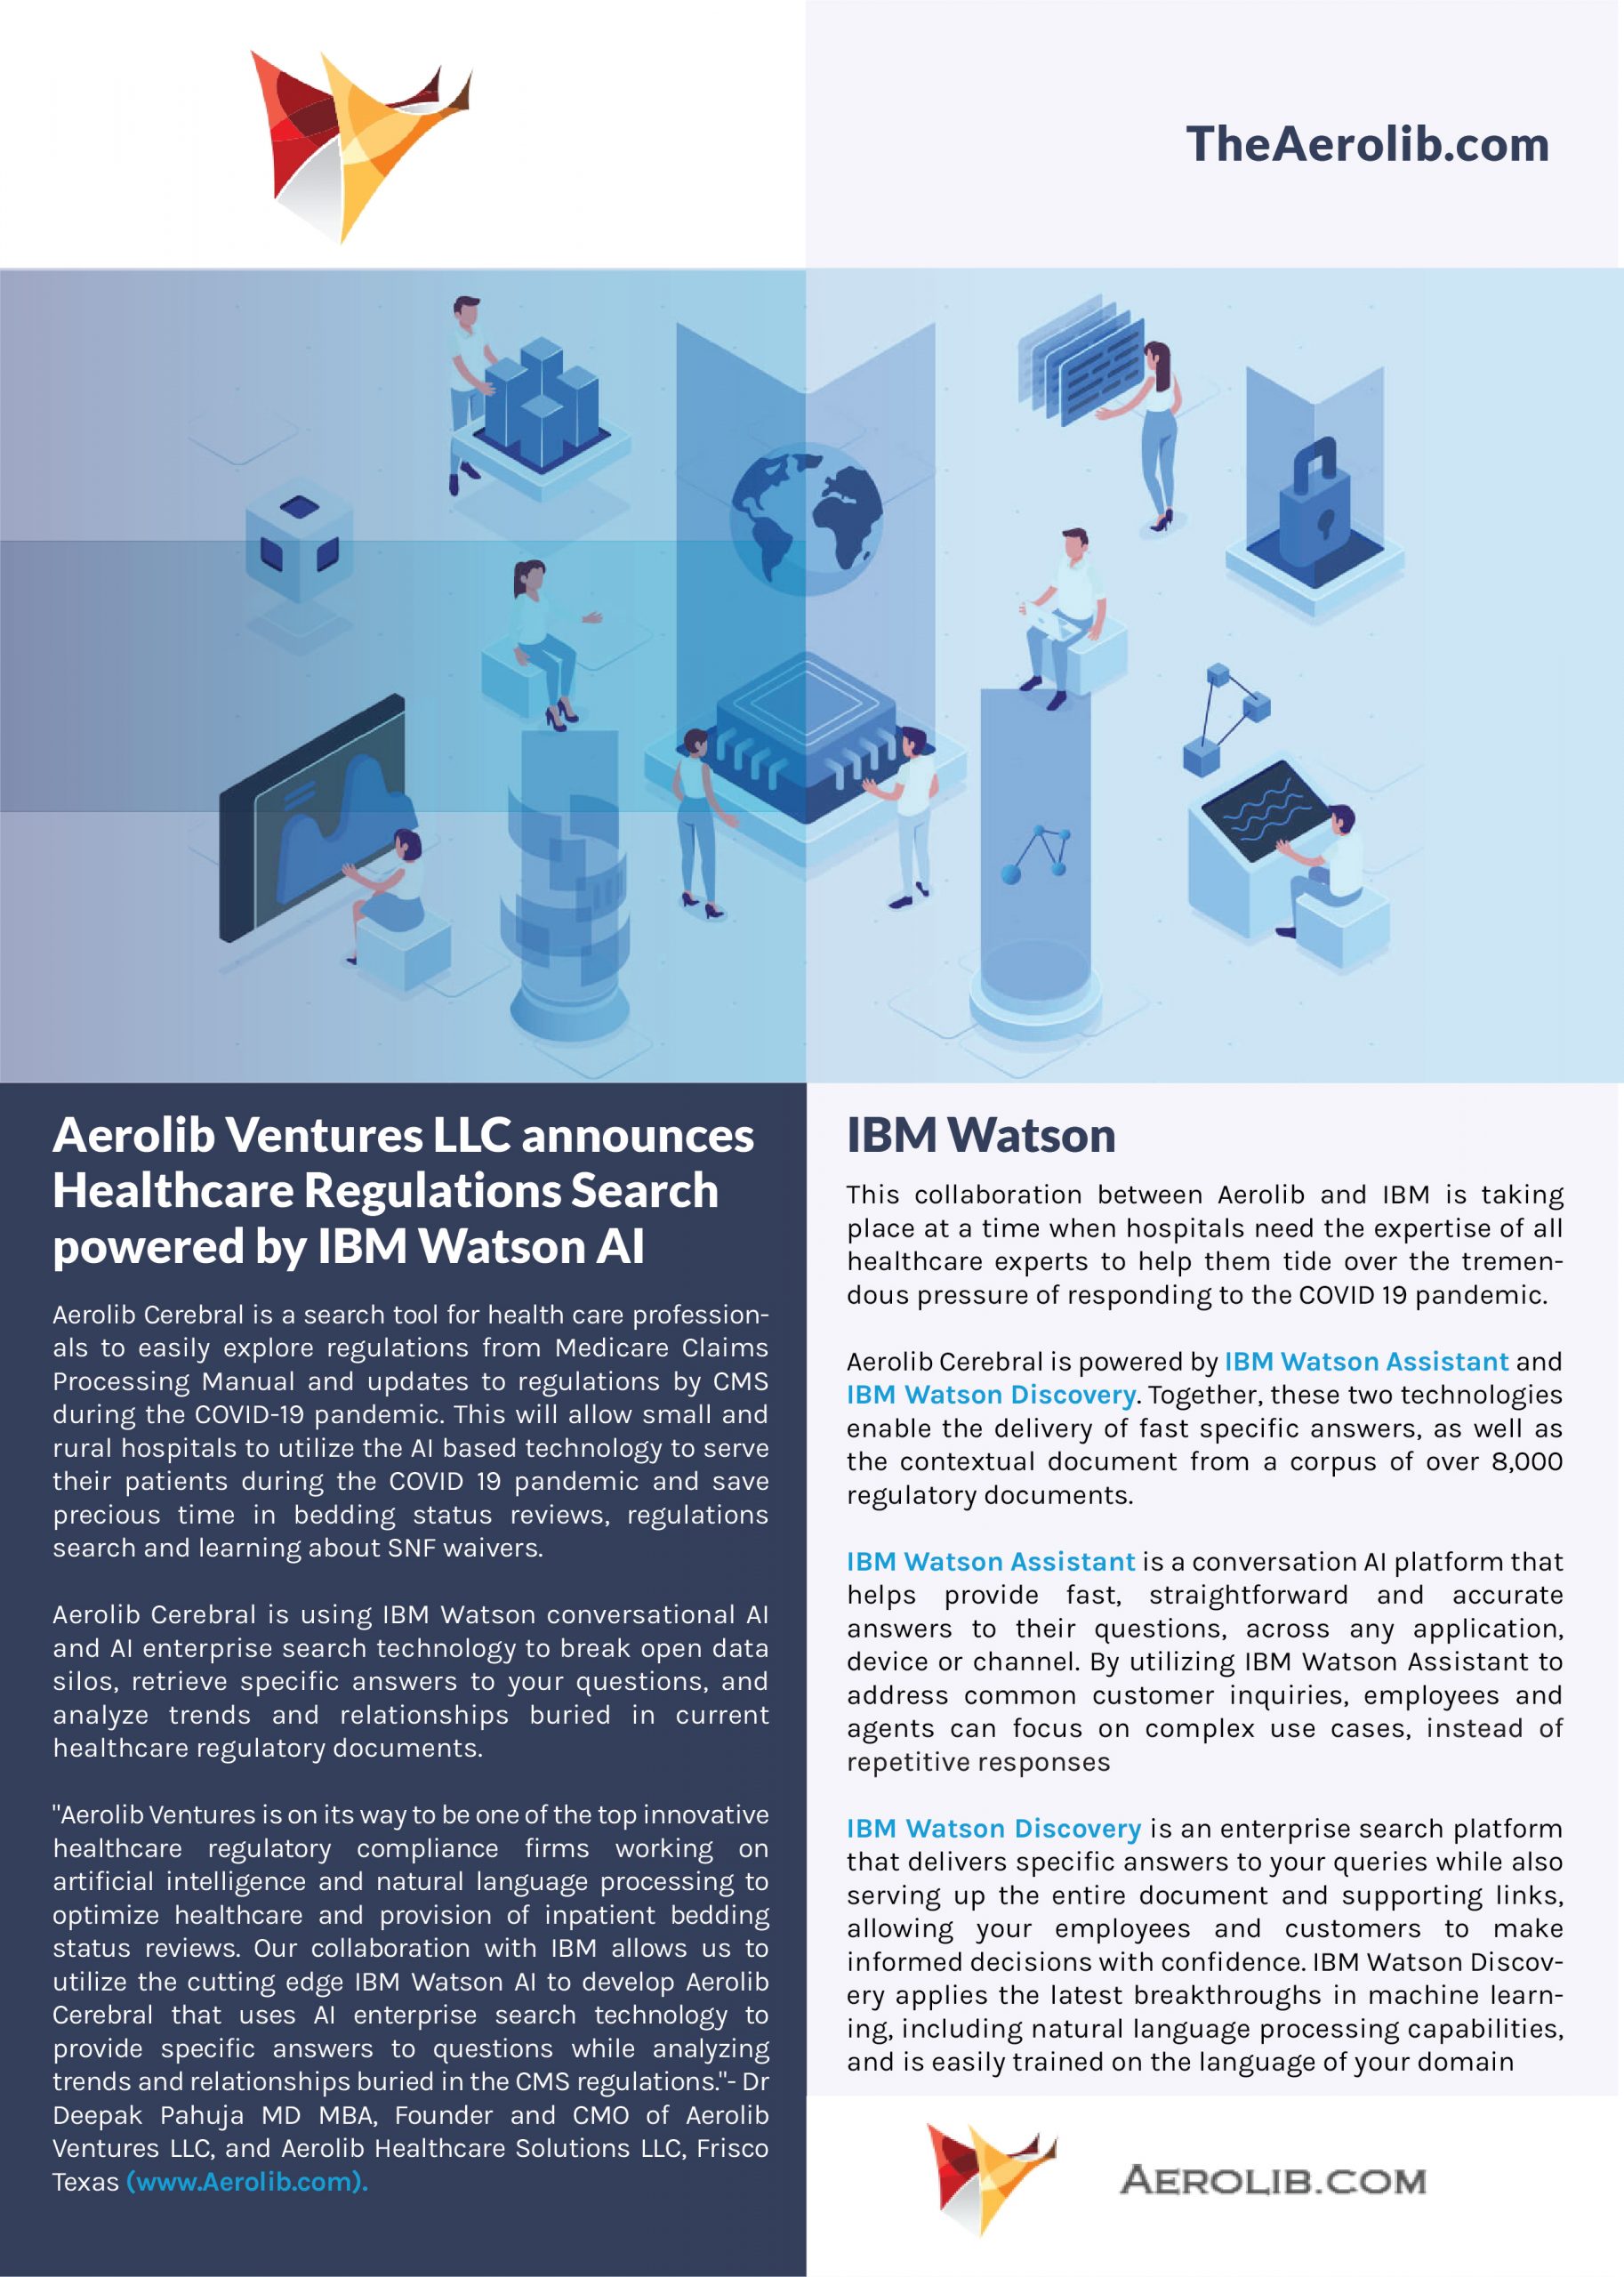 Aerolib Ventures LLC announces Healthcare Regulations Search powered by IBM Watson AI